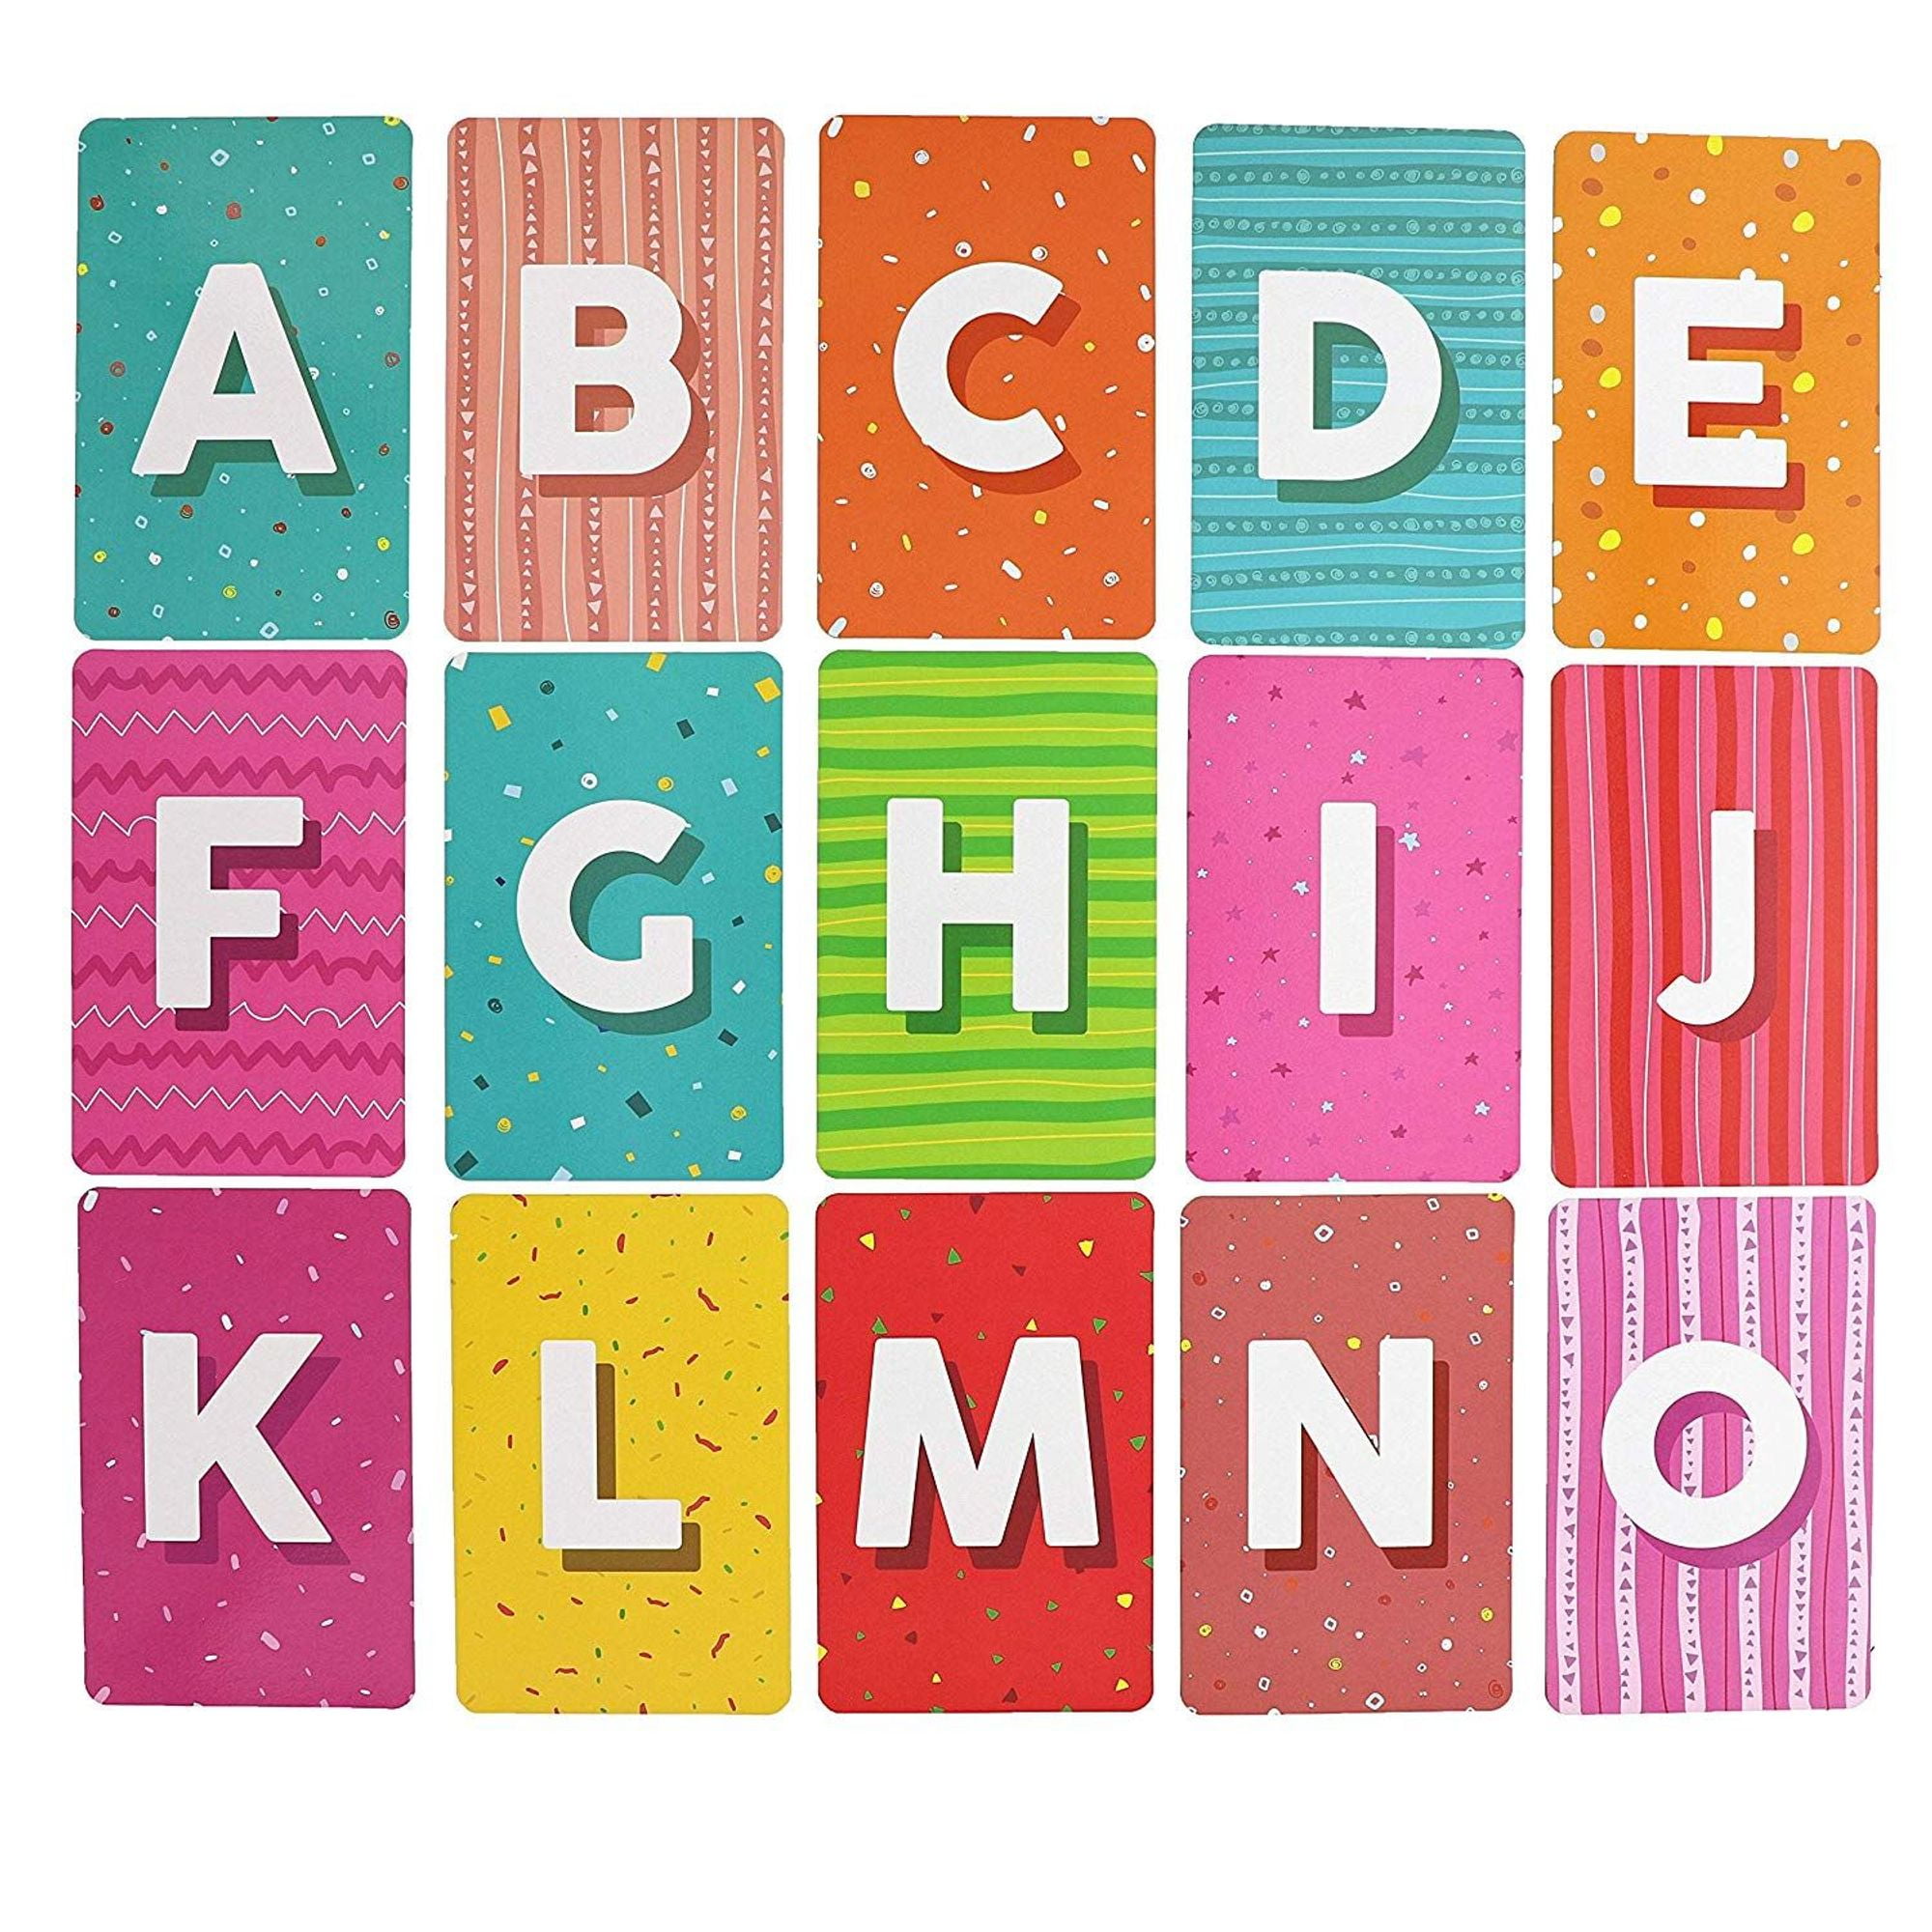 26 Count Alphabet Letters Flash Cards, Large